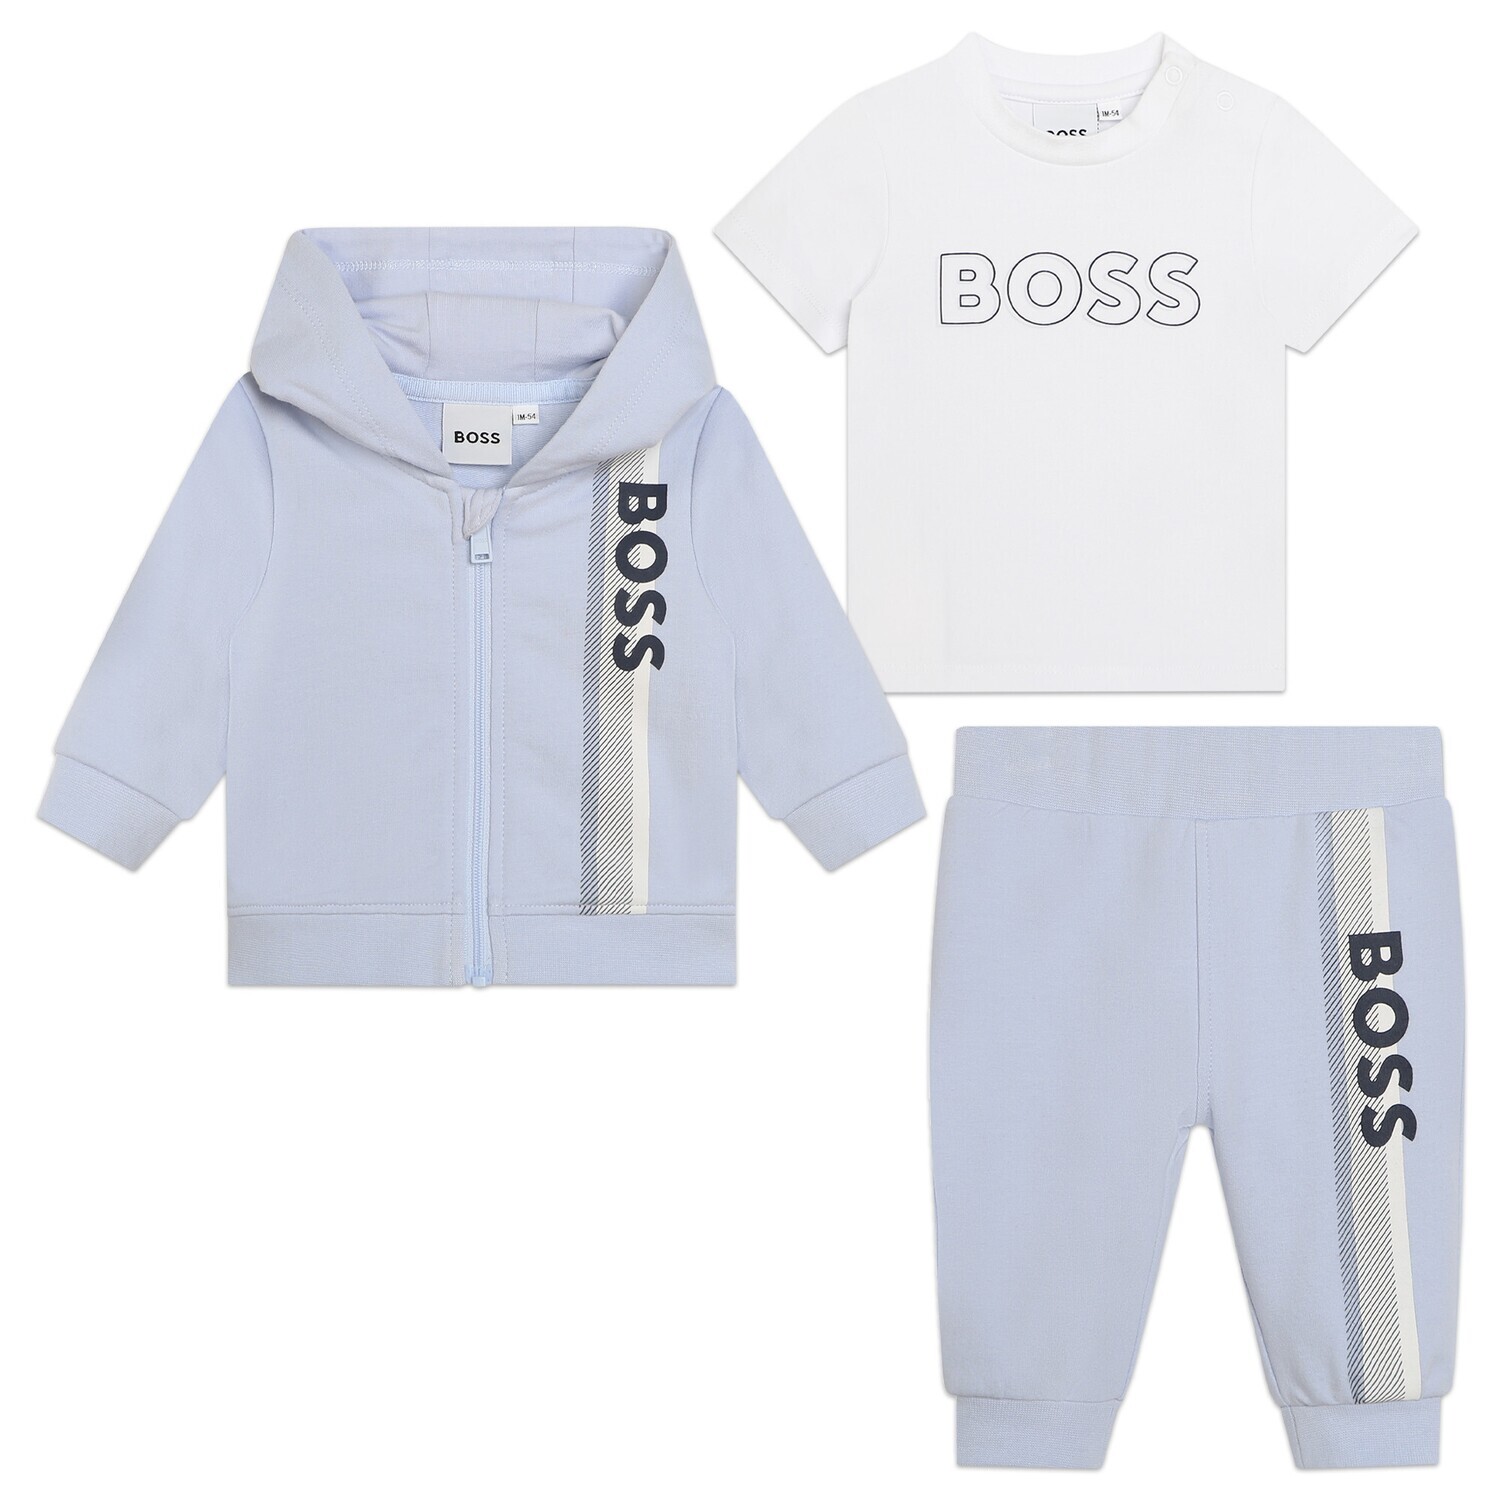 Boss J50784 Baby Boy's Sweats & Tee Set/, Color: NAVY, Size: 3M